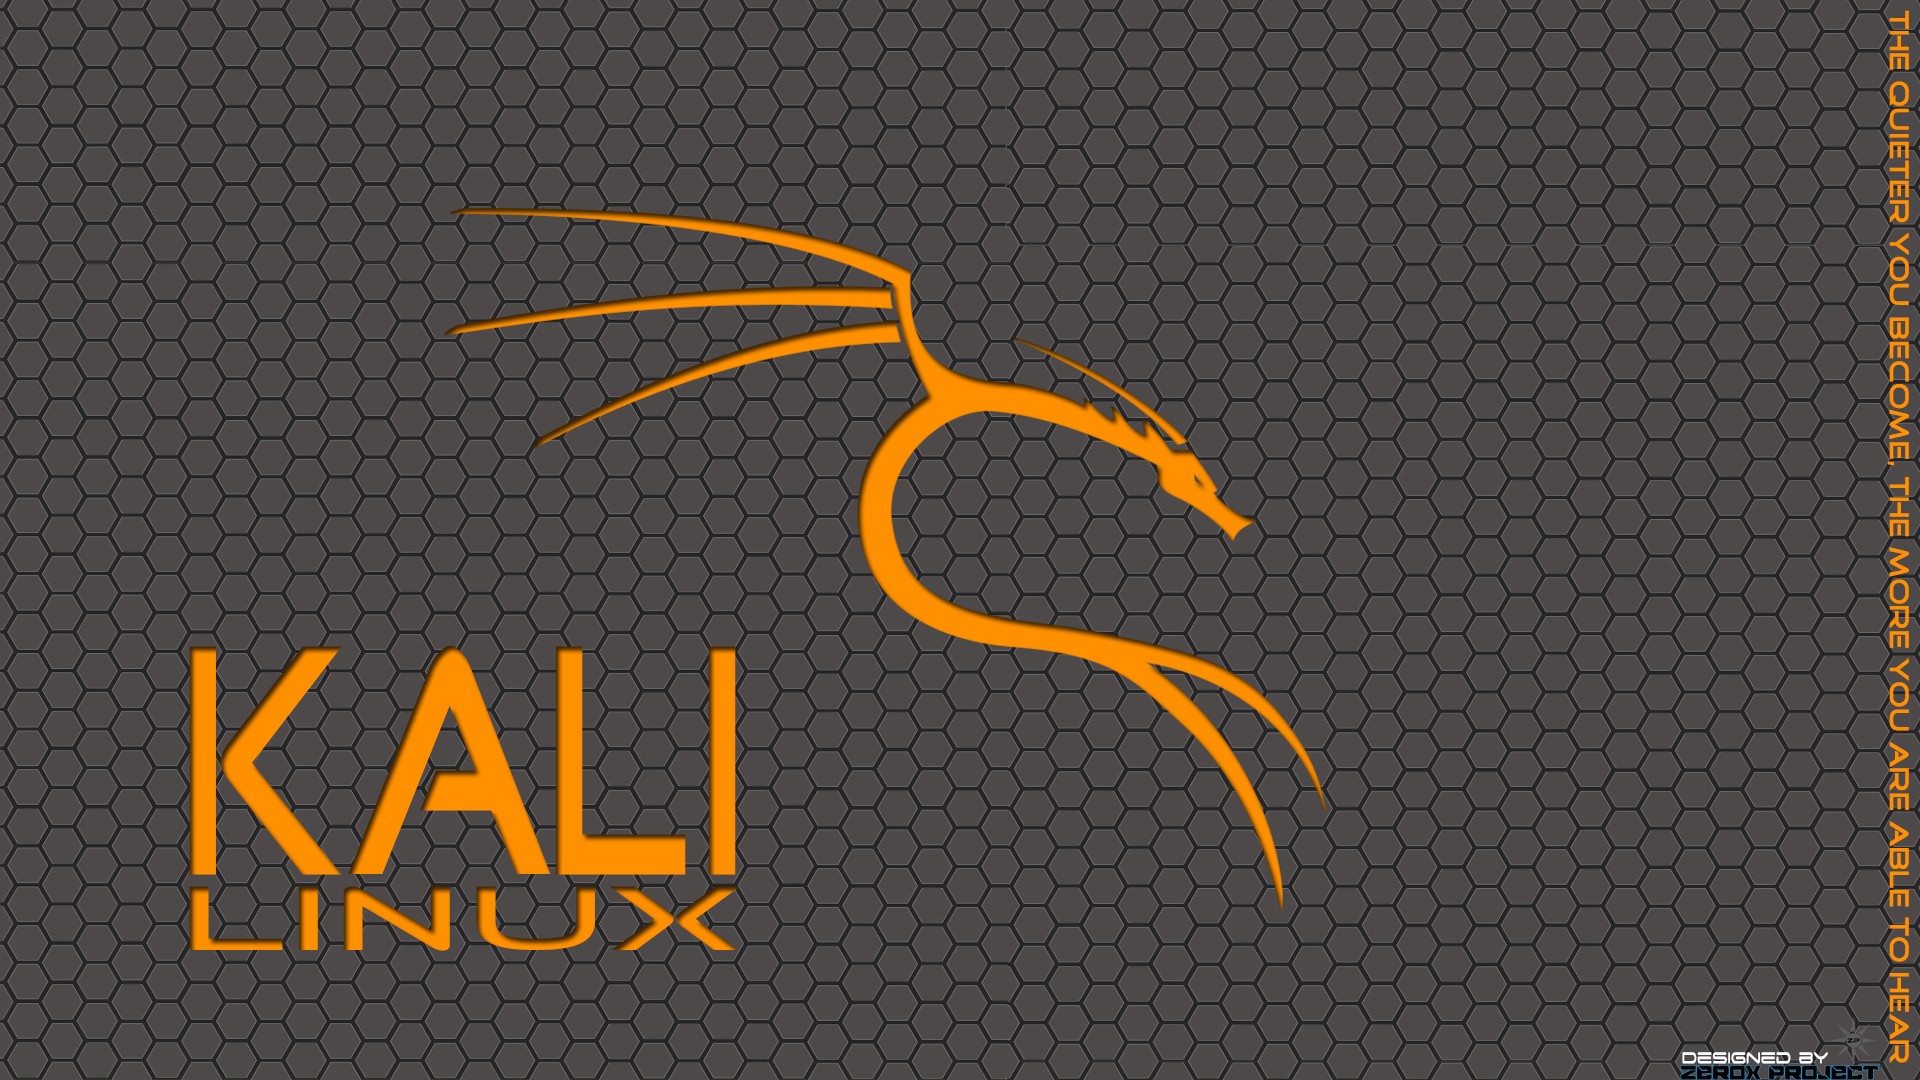 General 1920x1080 Kali Linux Kali Linux hacking distro dragon operating system